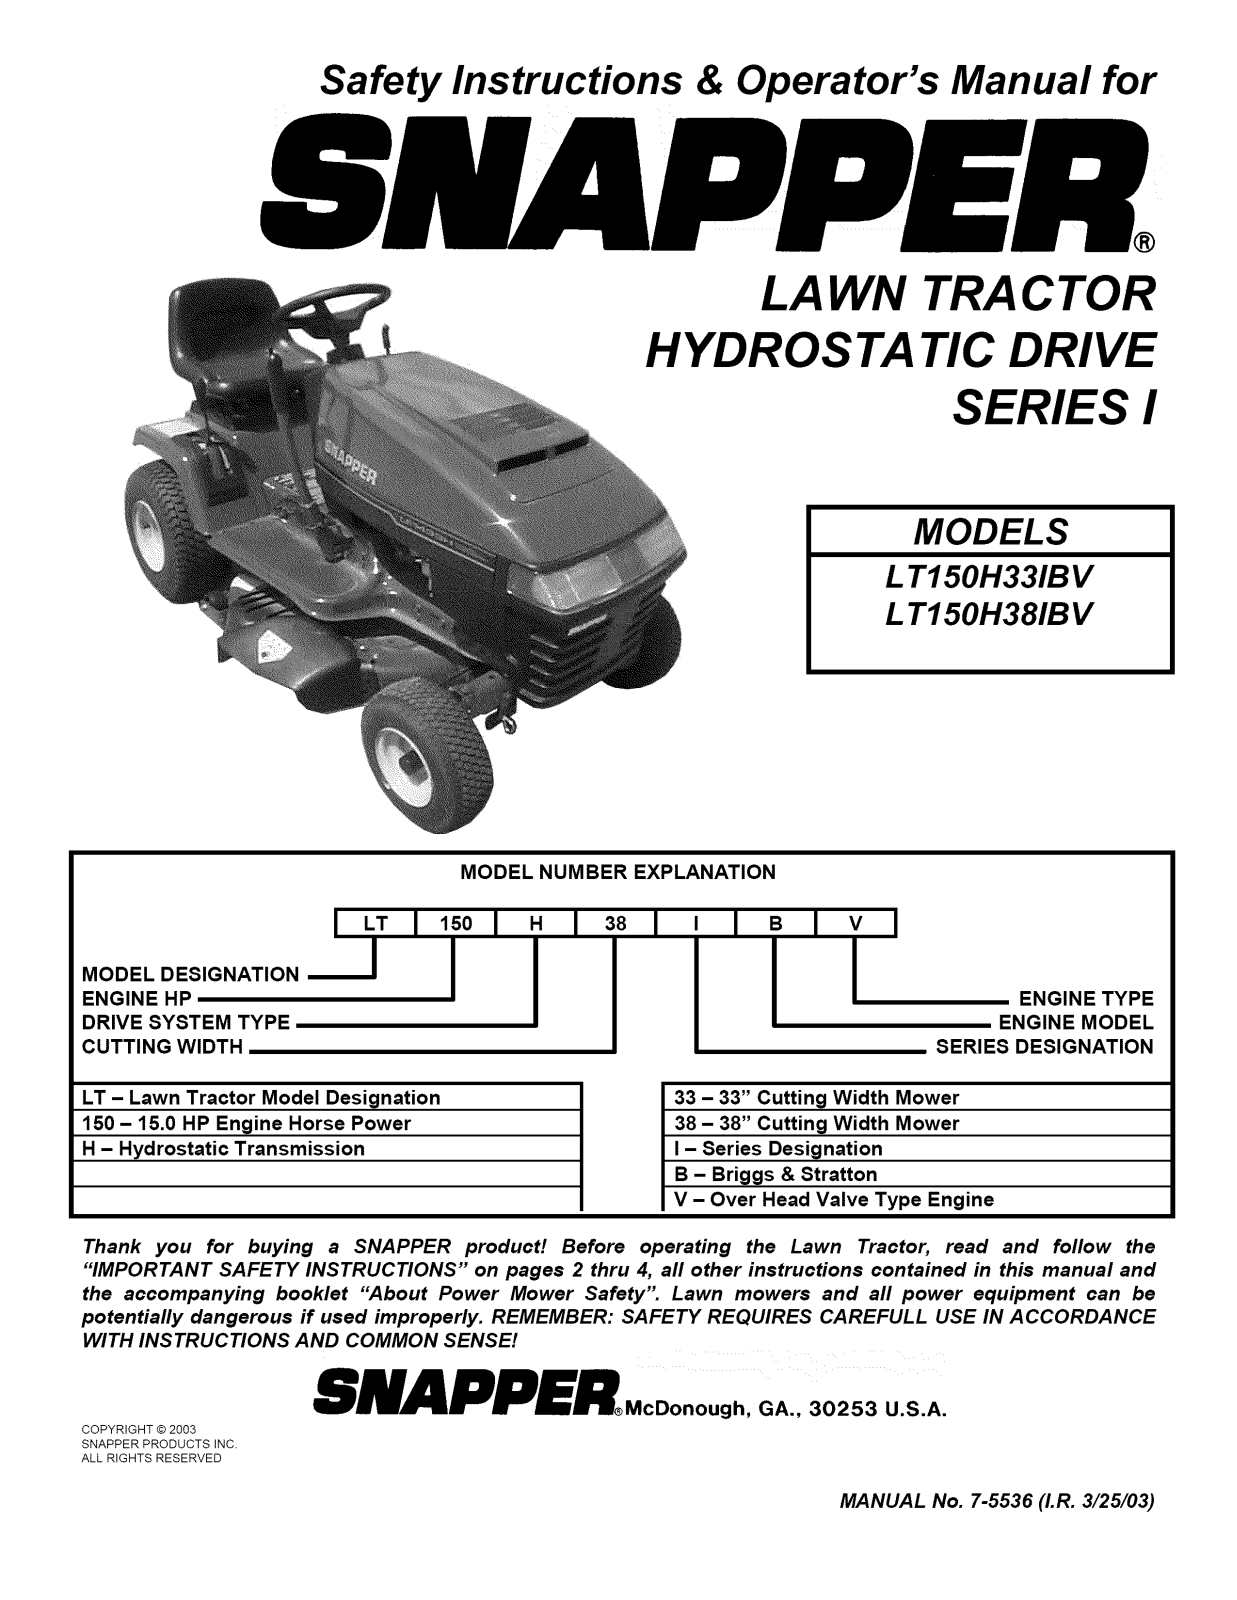 Snapper LT150H38IBV, LT150H33IBV Owner’s Manual